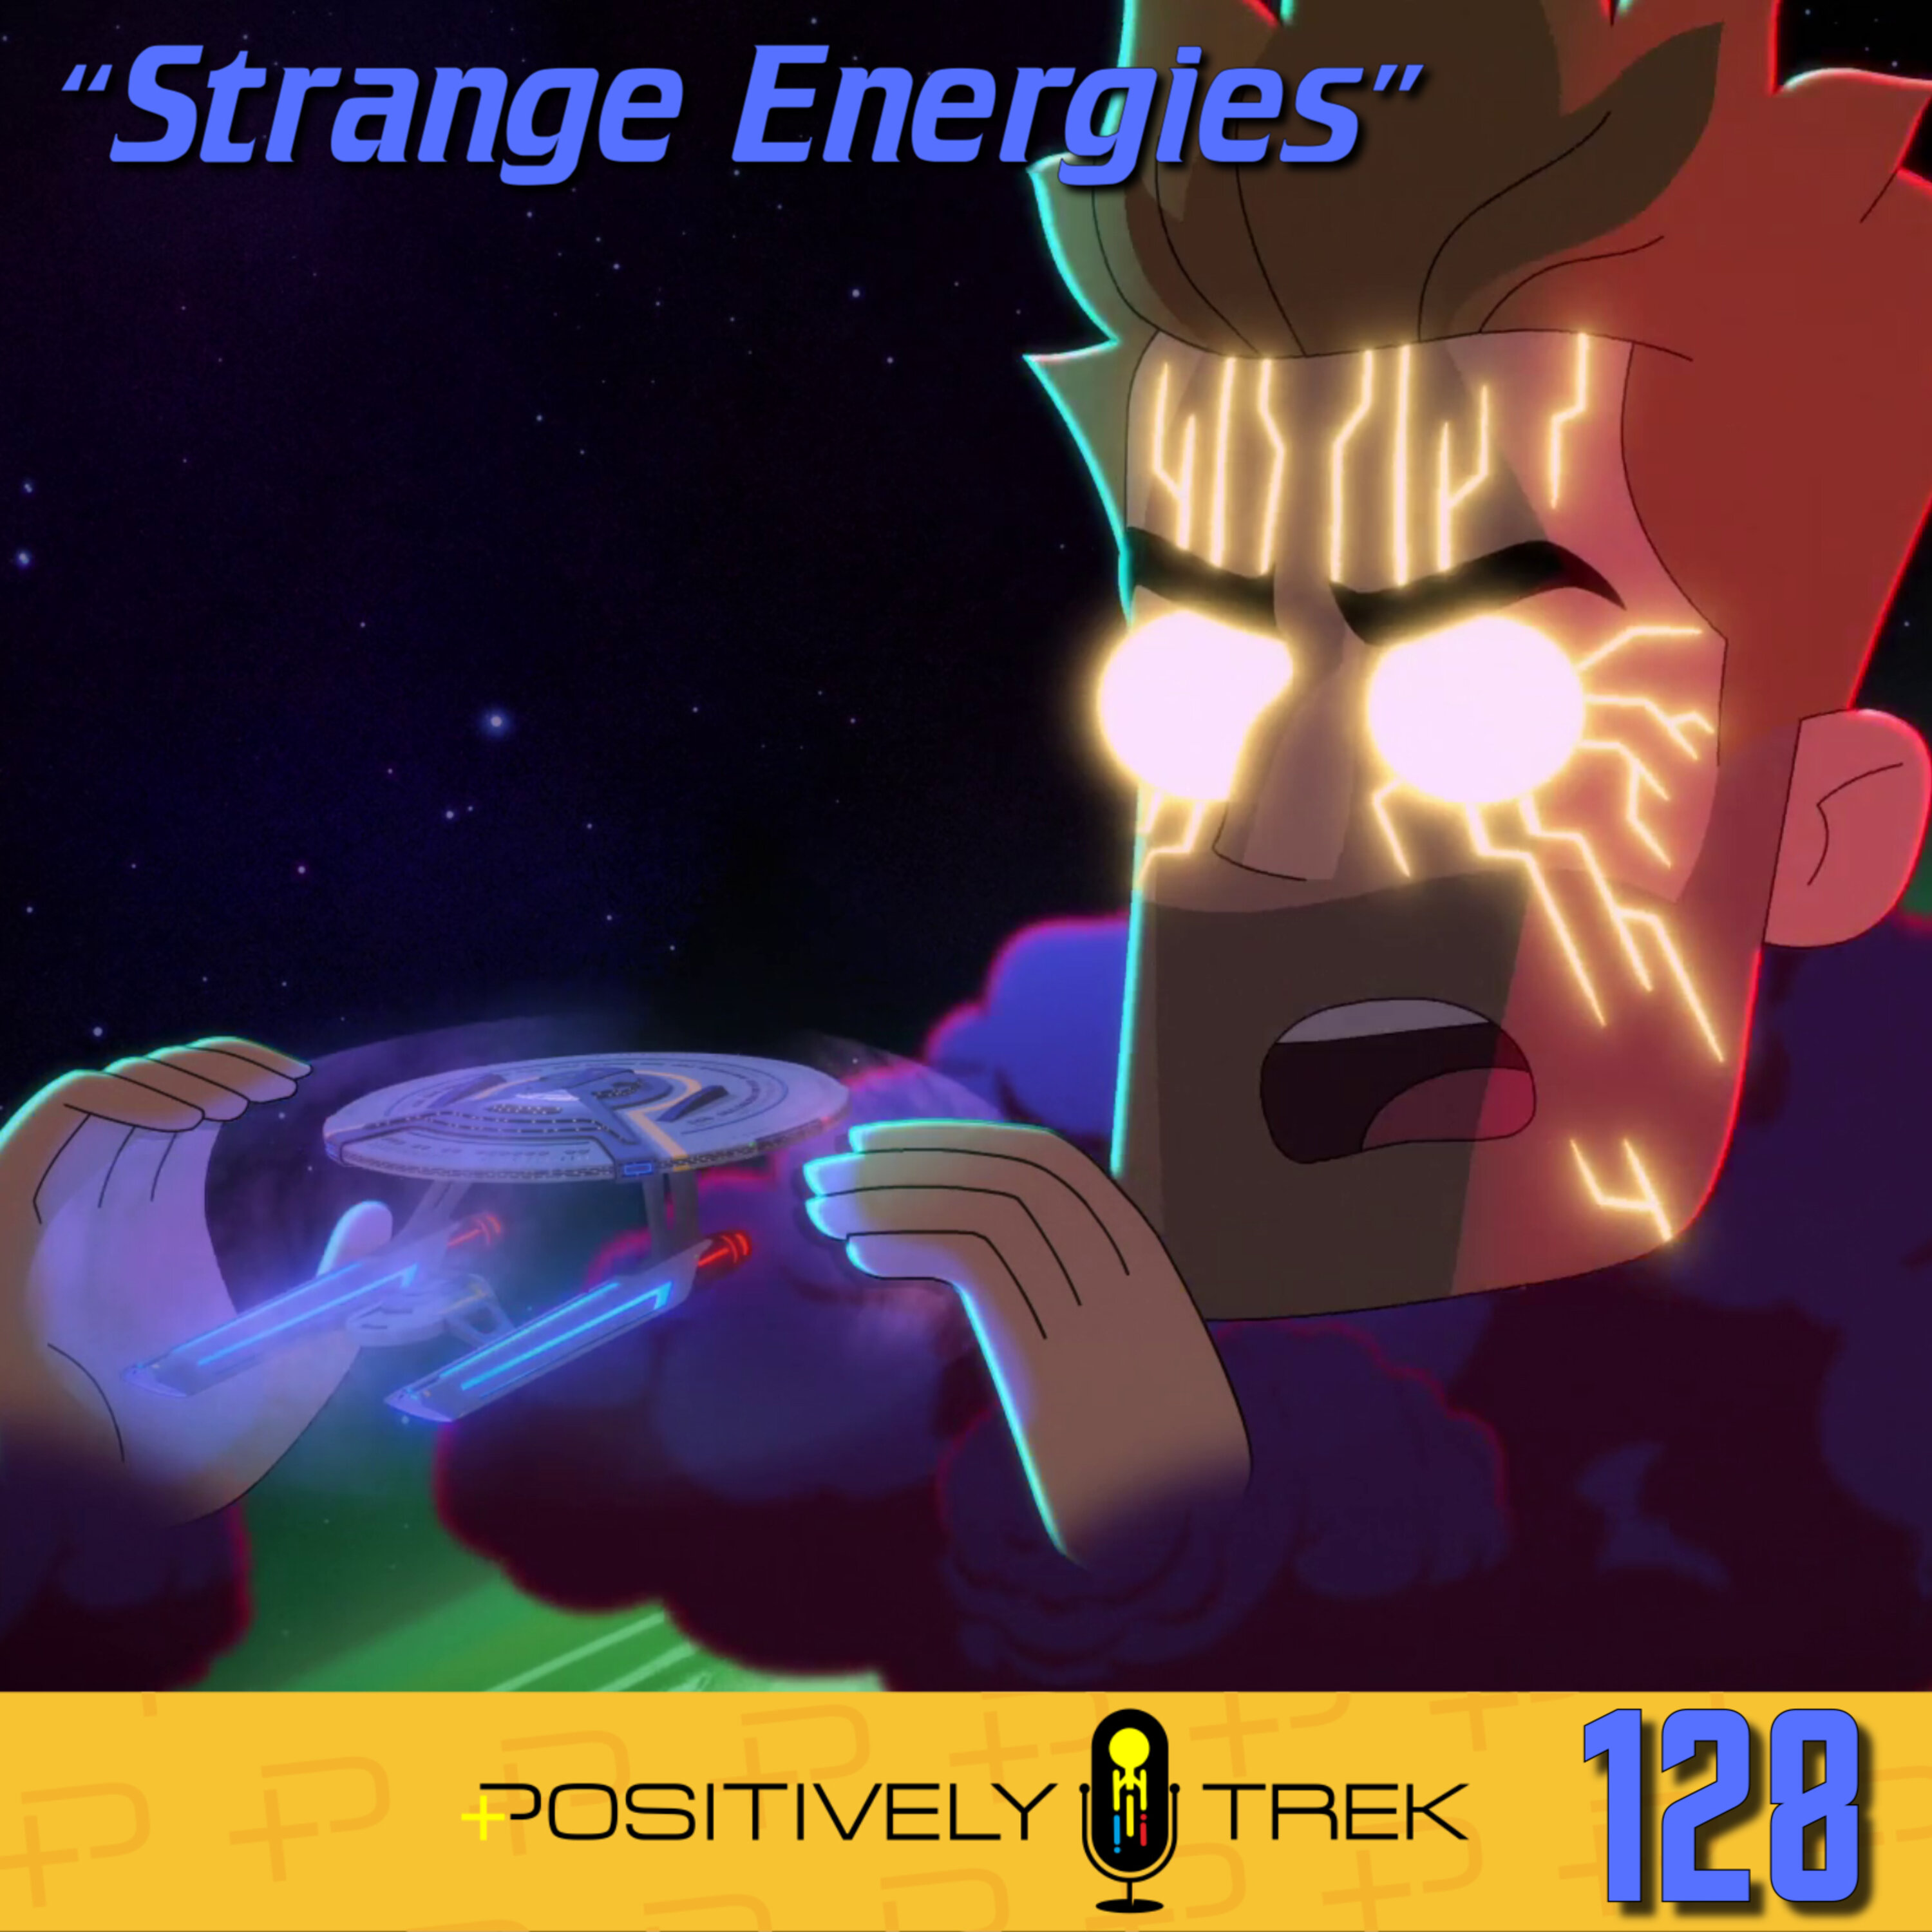 Lower Decks Review: “Strange Energies” (2.01)